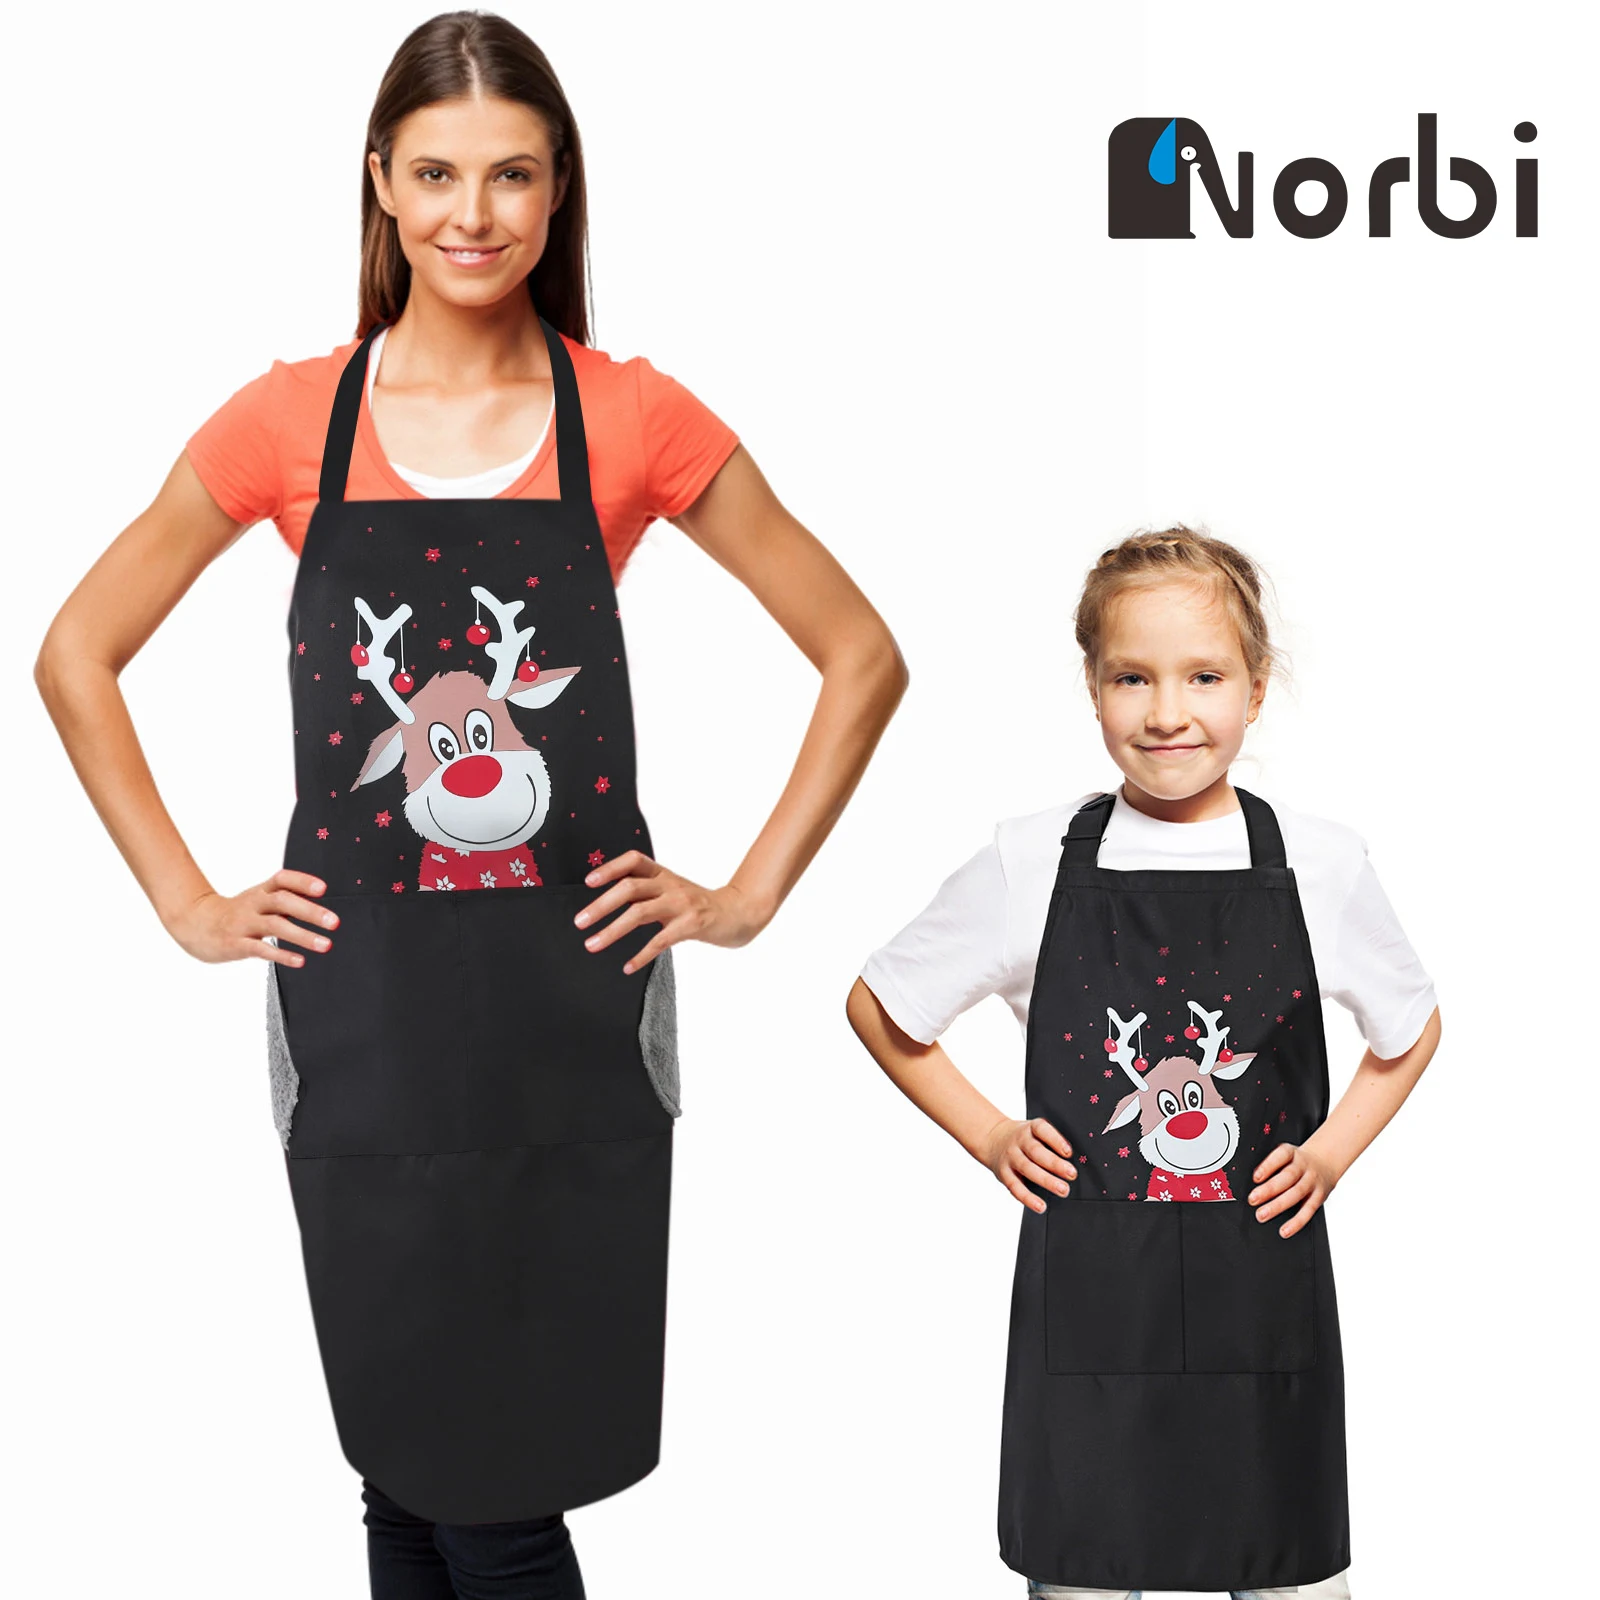 Norbi Heart Printed Aprons, Length Adjustable Parent-Child